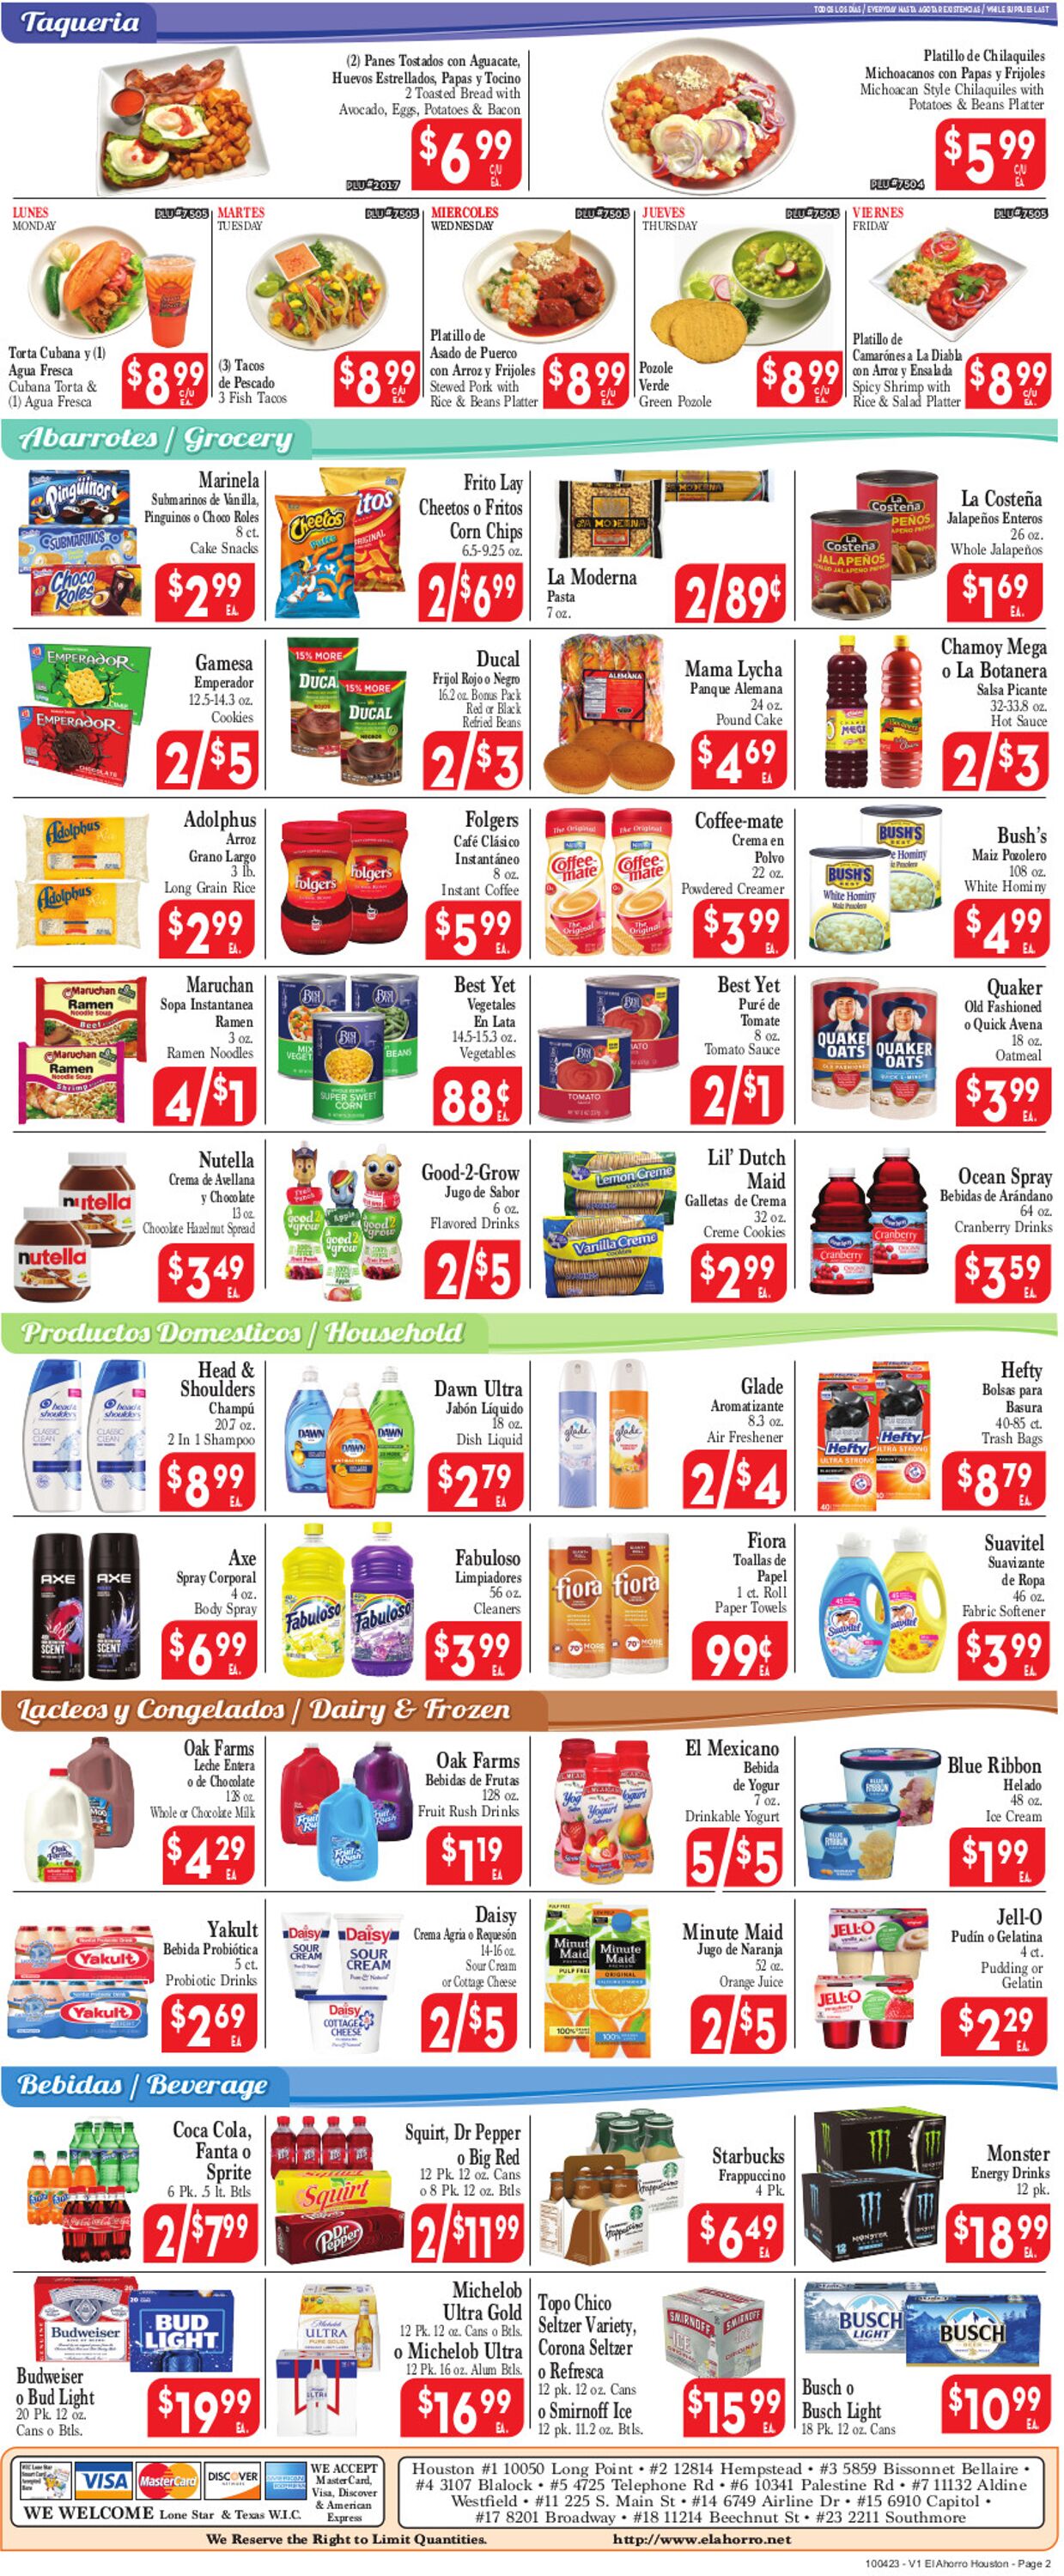 Catalogue El Ahorro Supermarket from 10/04/2023